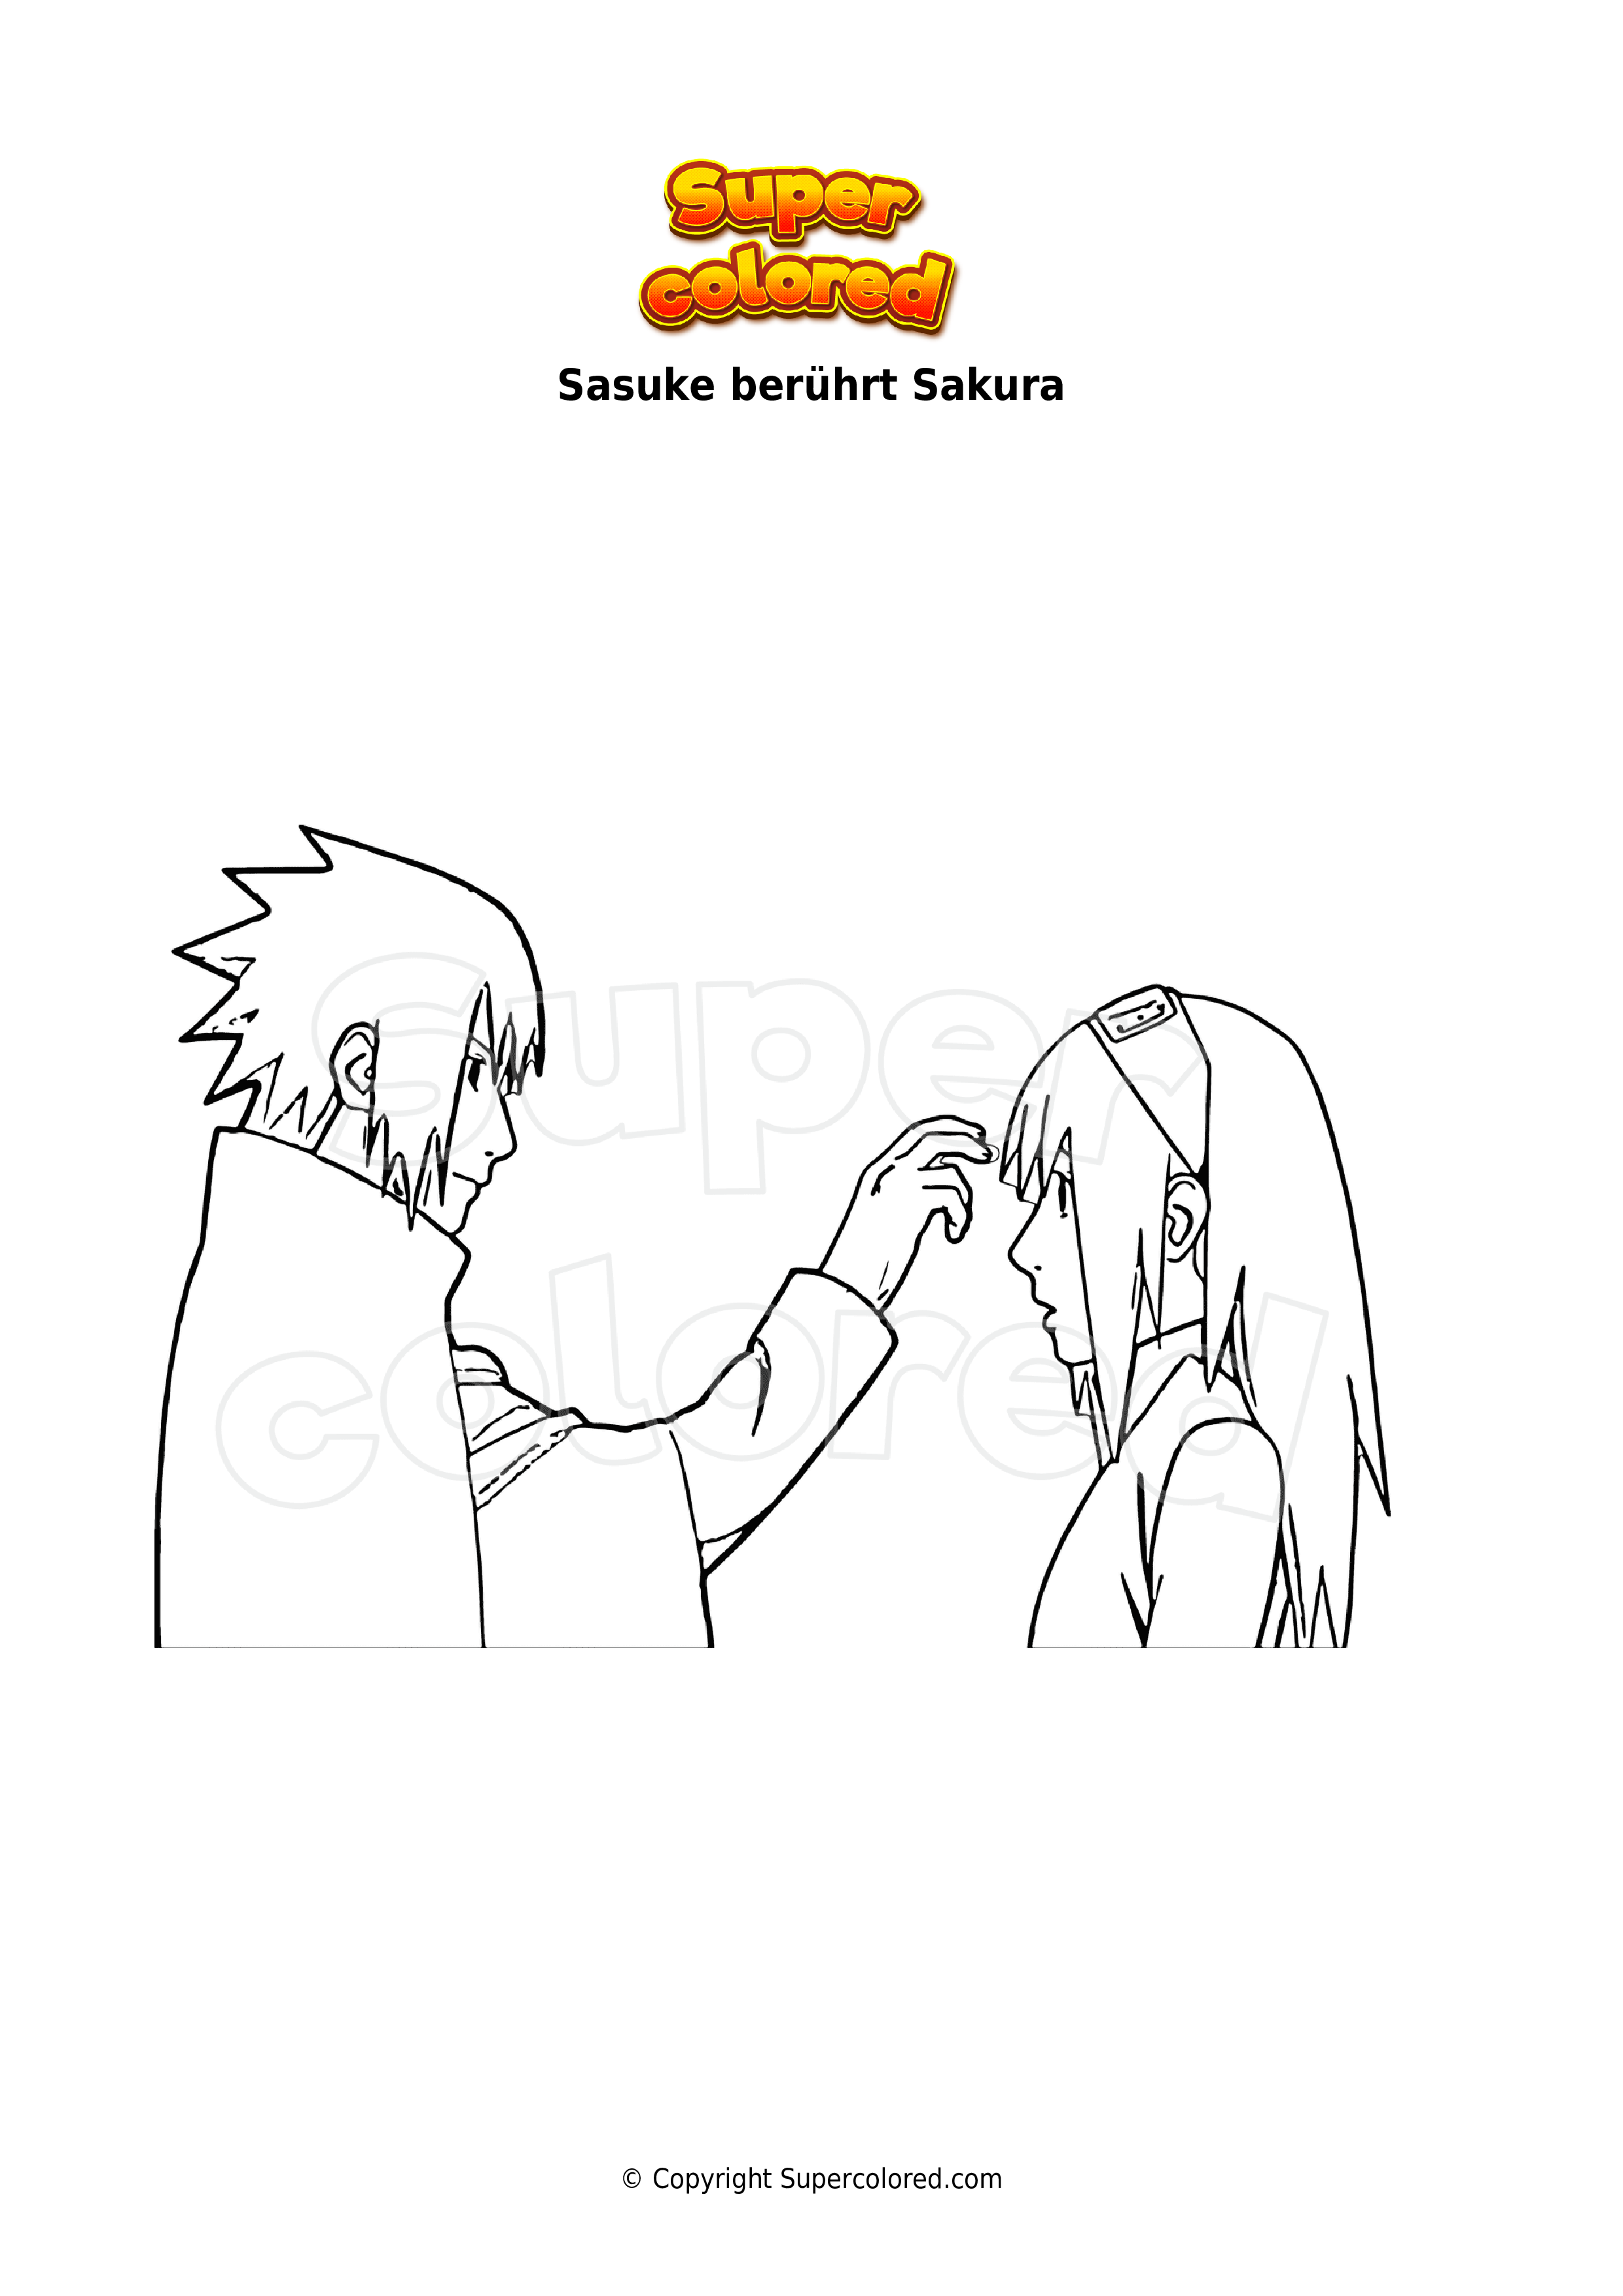 Ausmalbild Sasuke berührt Sakura - Supercolored.com